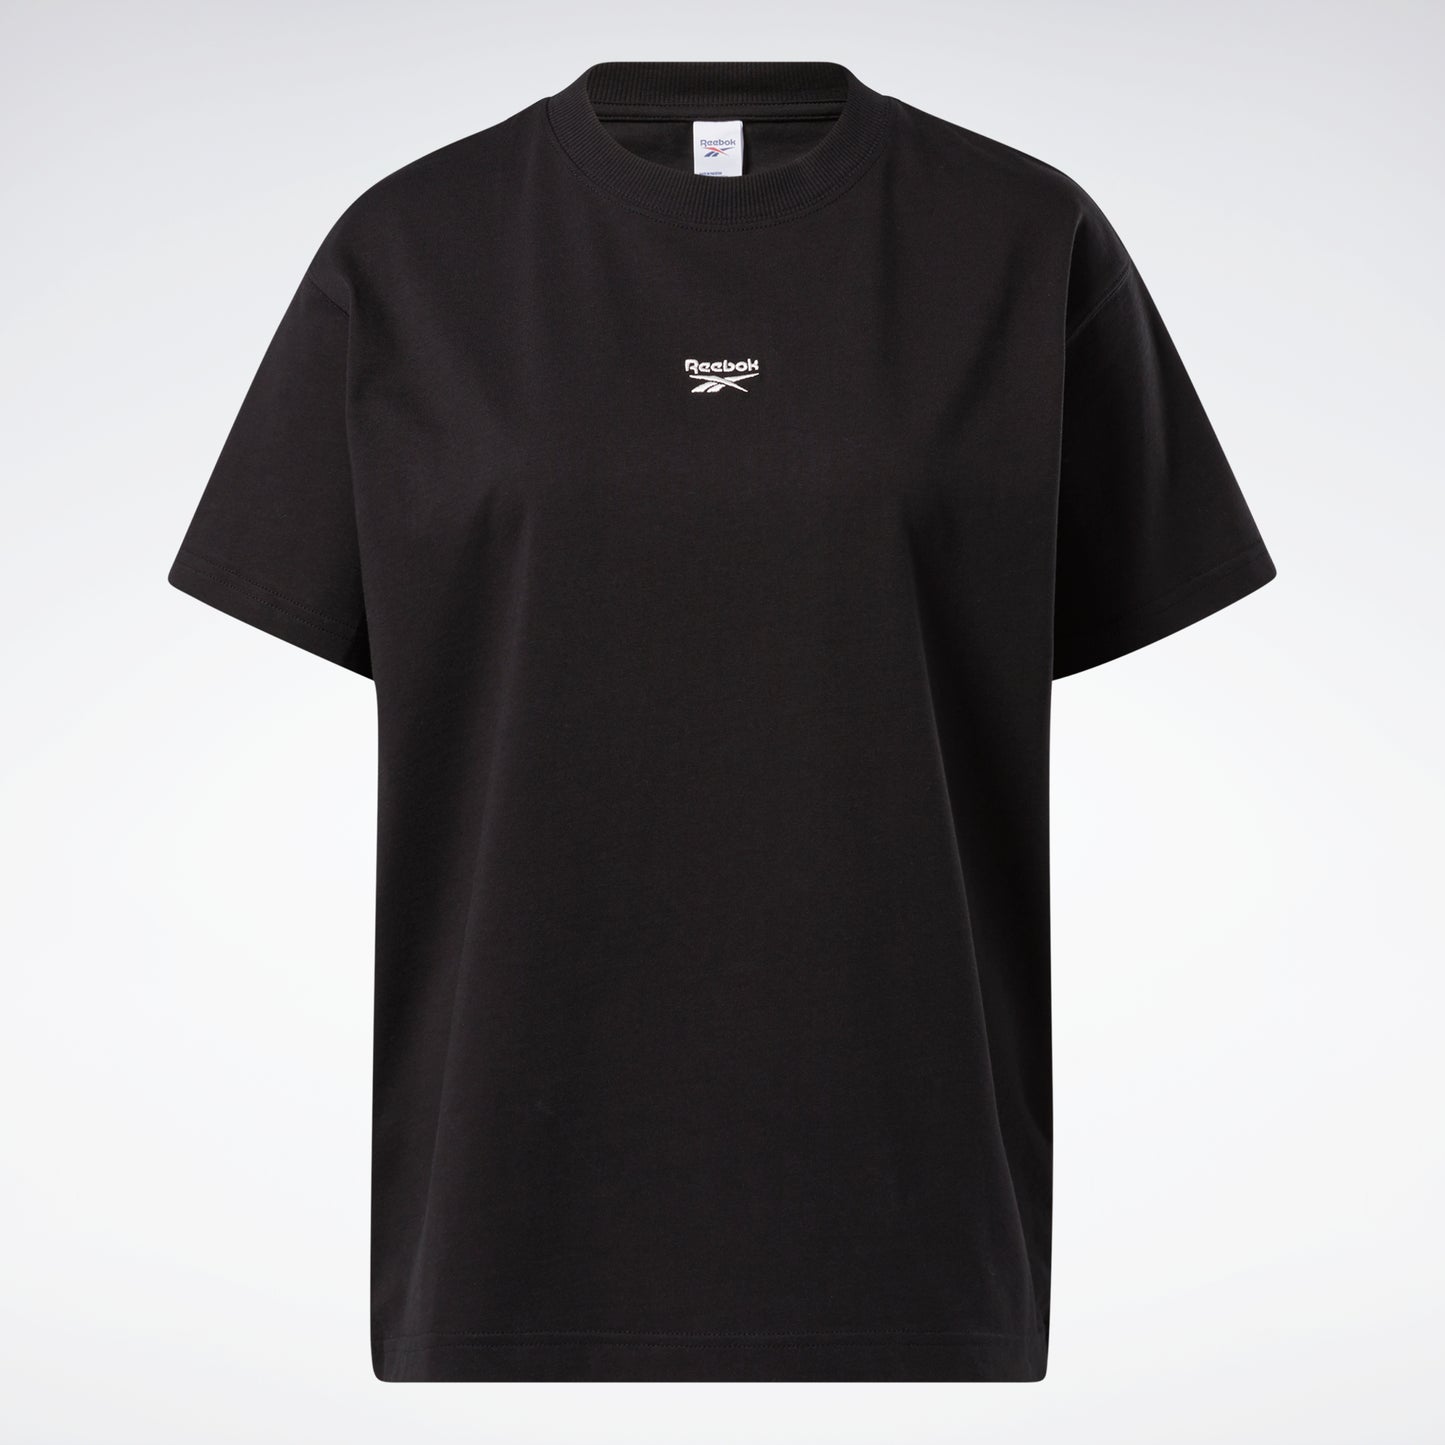 Reebok Classic cotton T-shirt RES Tee black color